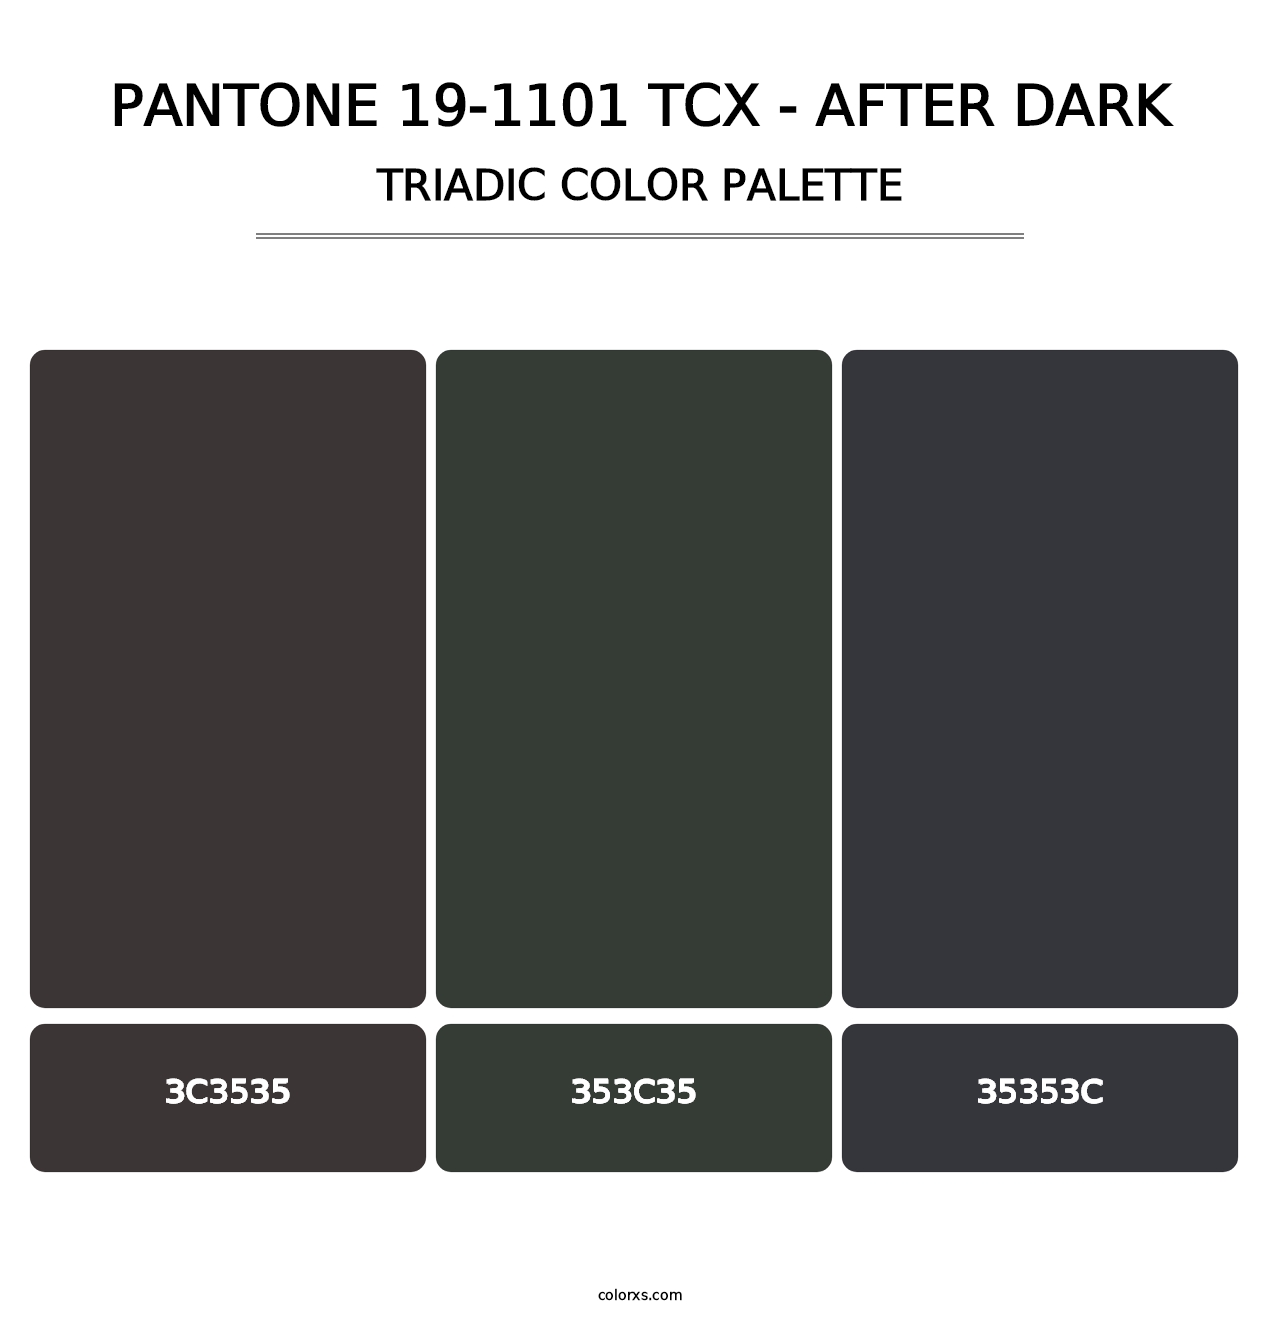 PANTONE 19-1101 TCX - After Dark - Triadic Color Palette